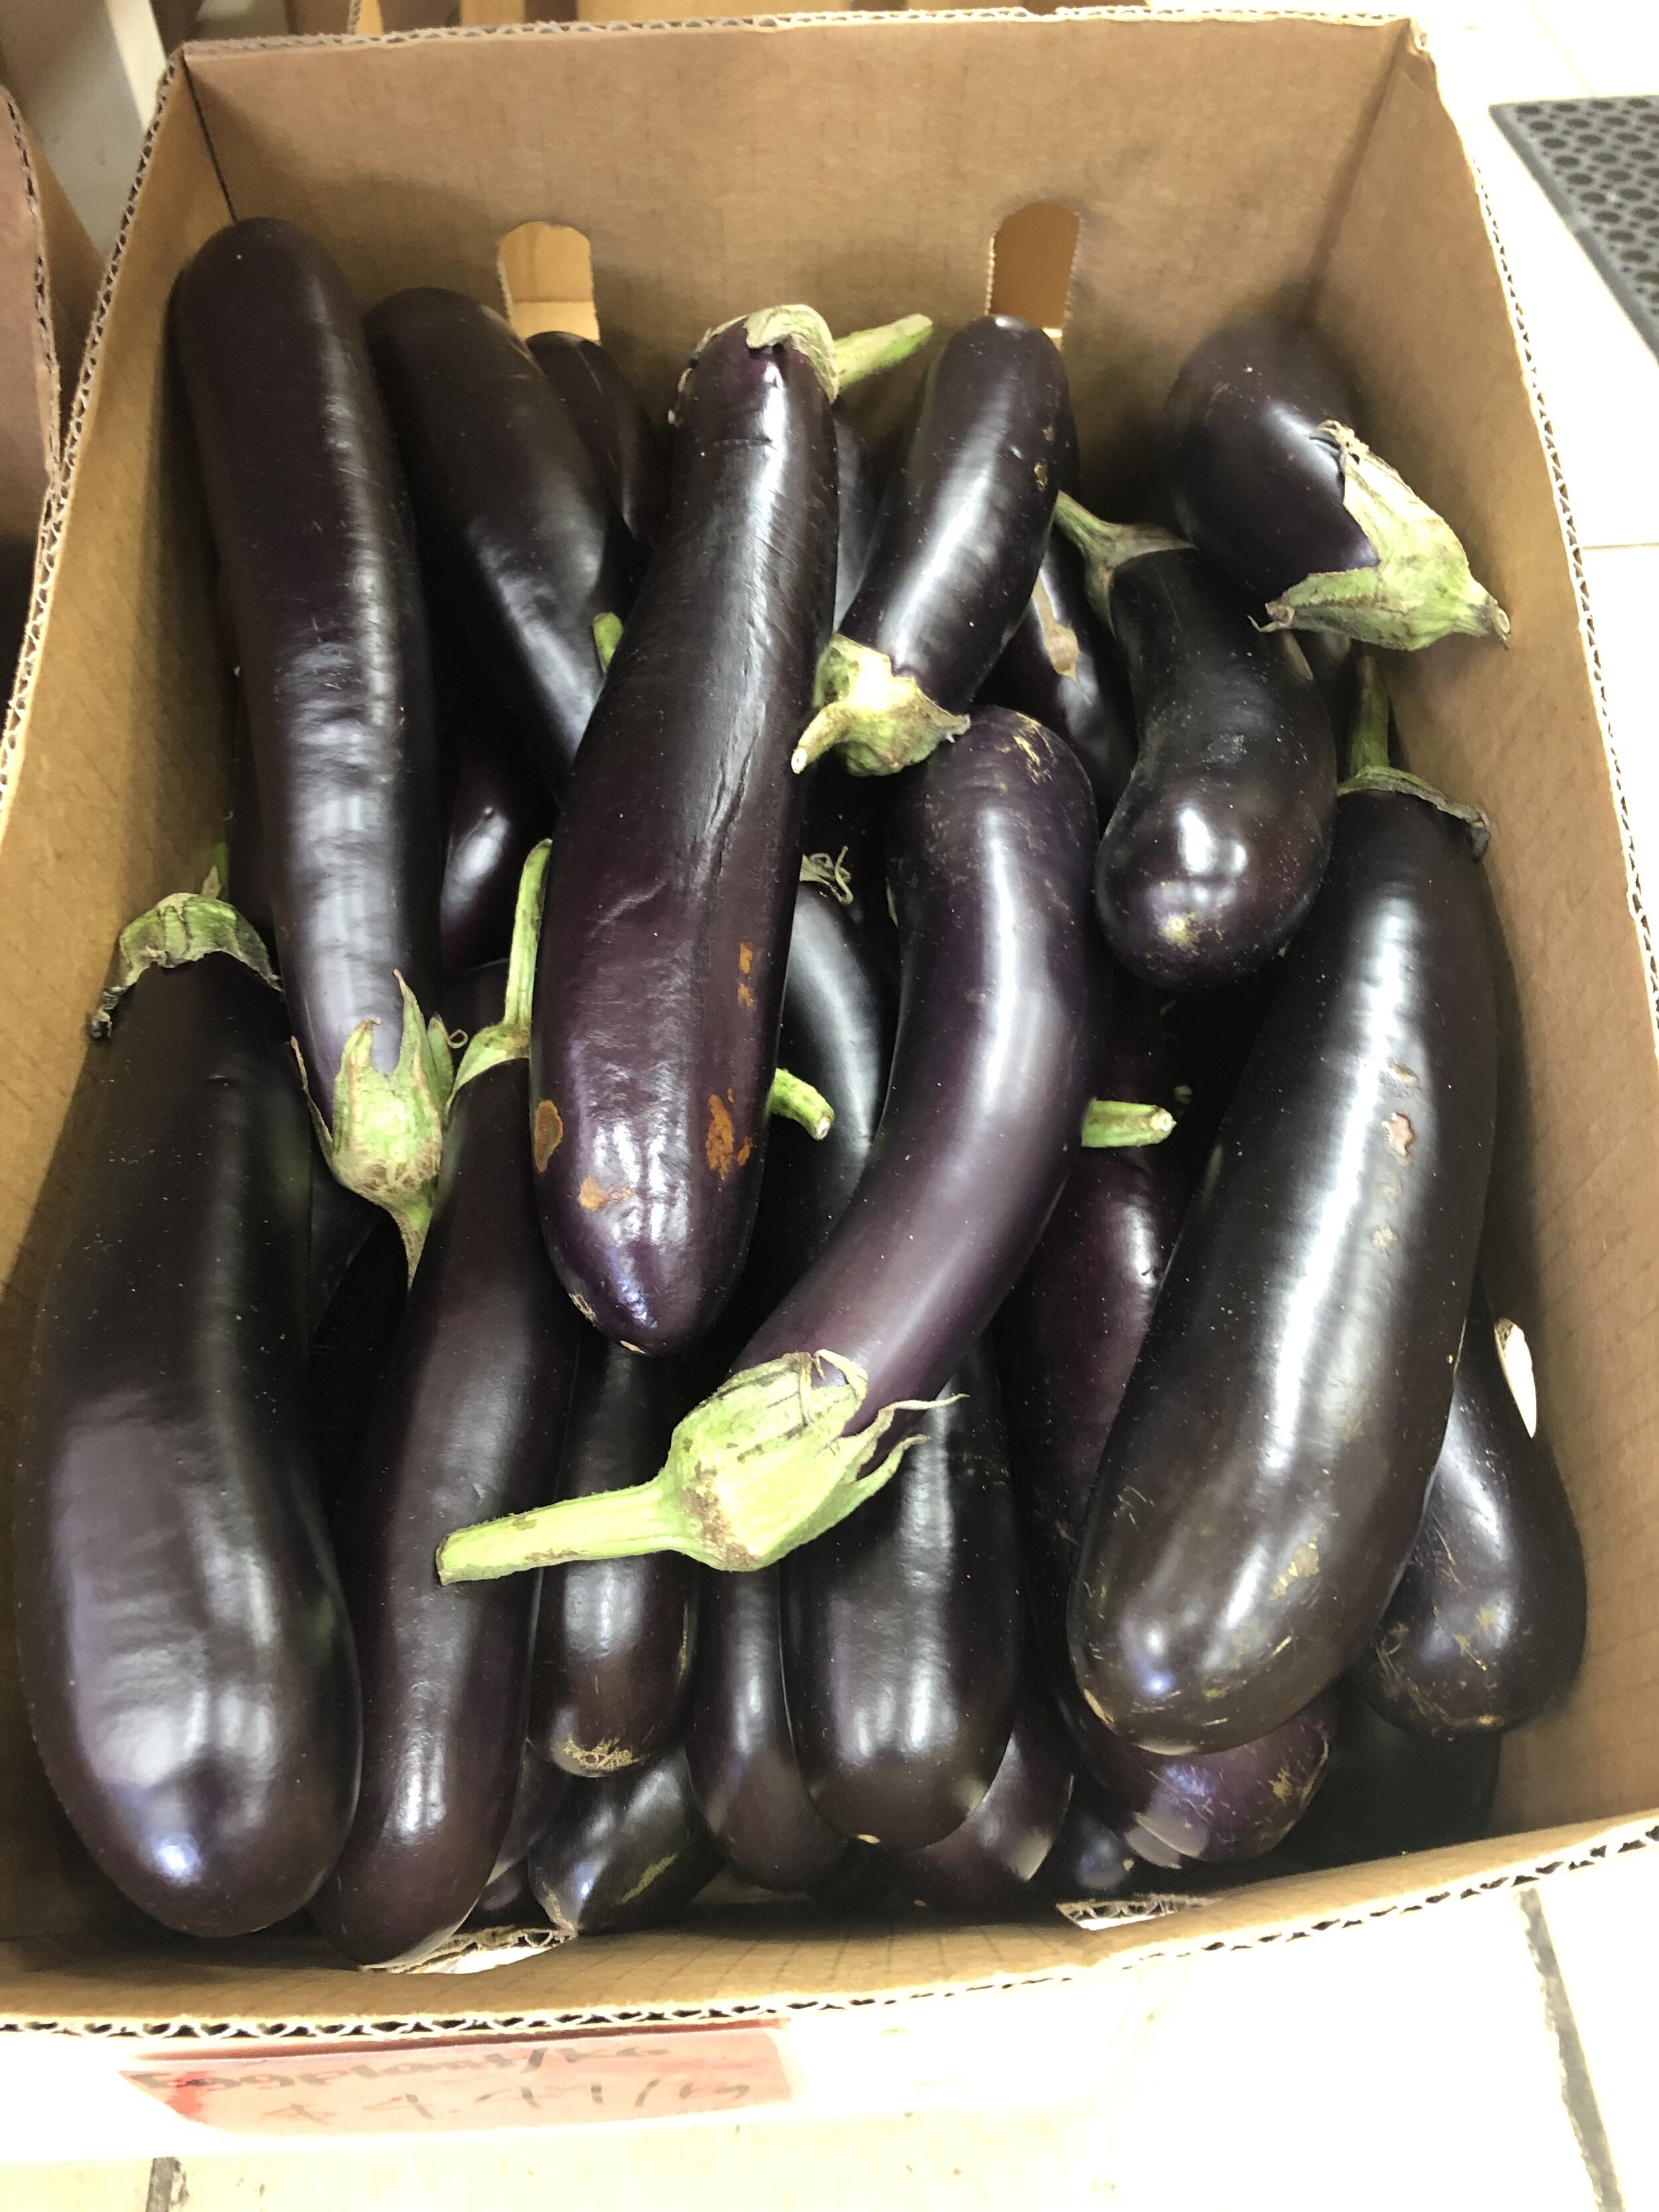 Jennifer_Photo10 (Eggplants in box).jpeg